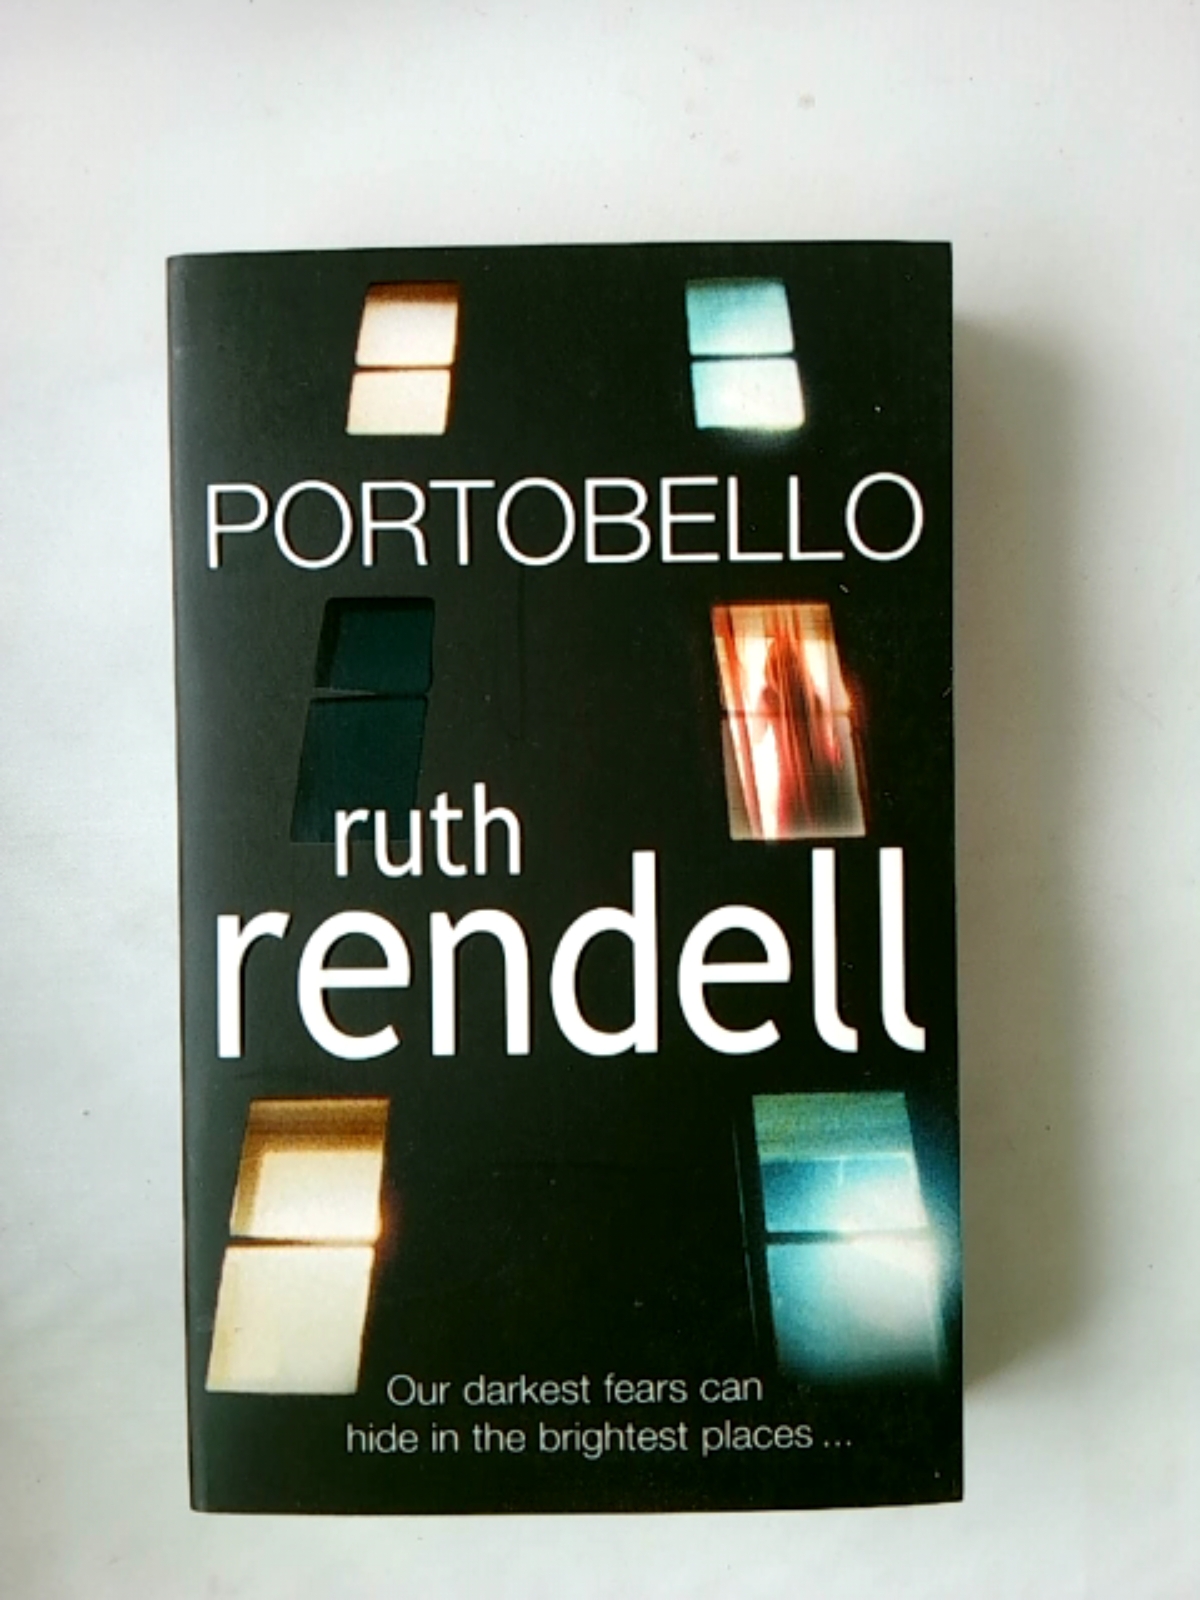 Portobello Rendell, Ruth - Ruth Rendell